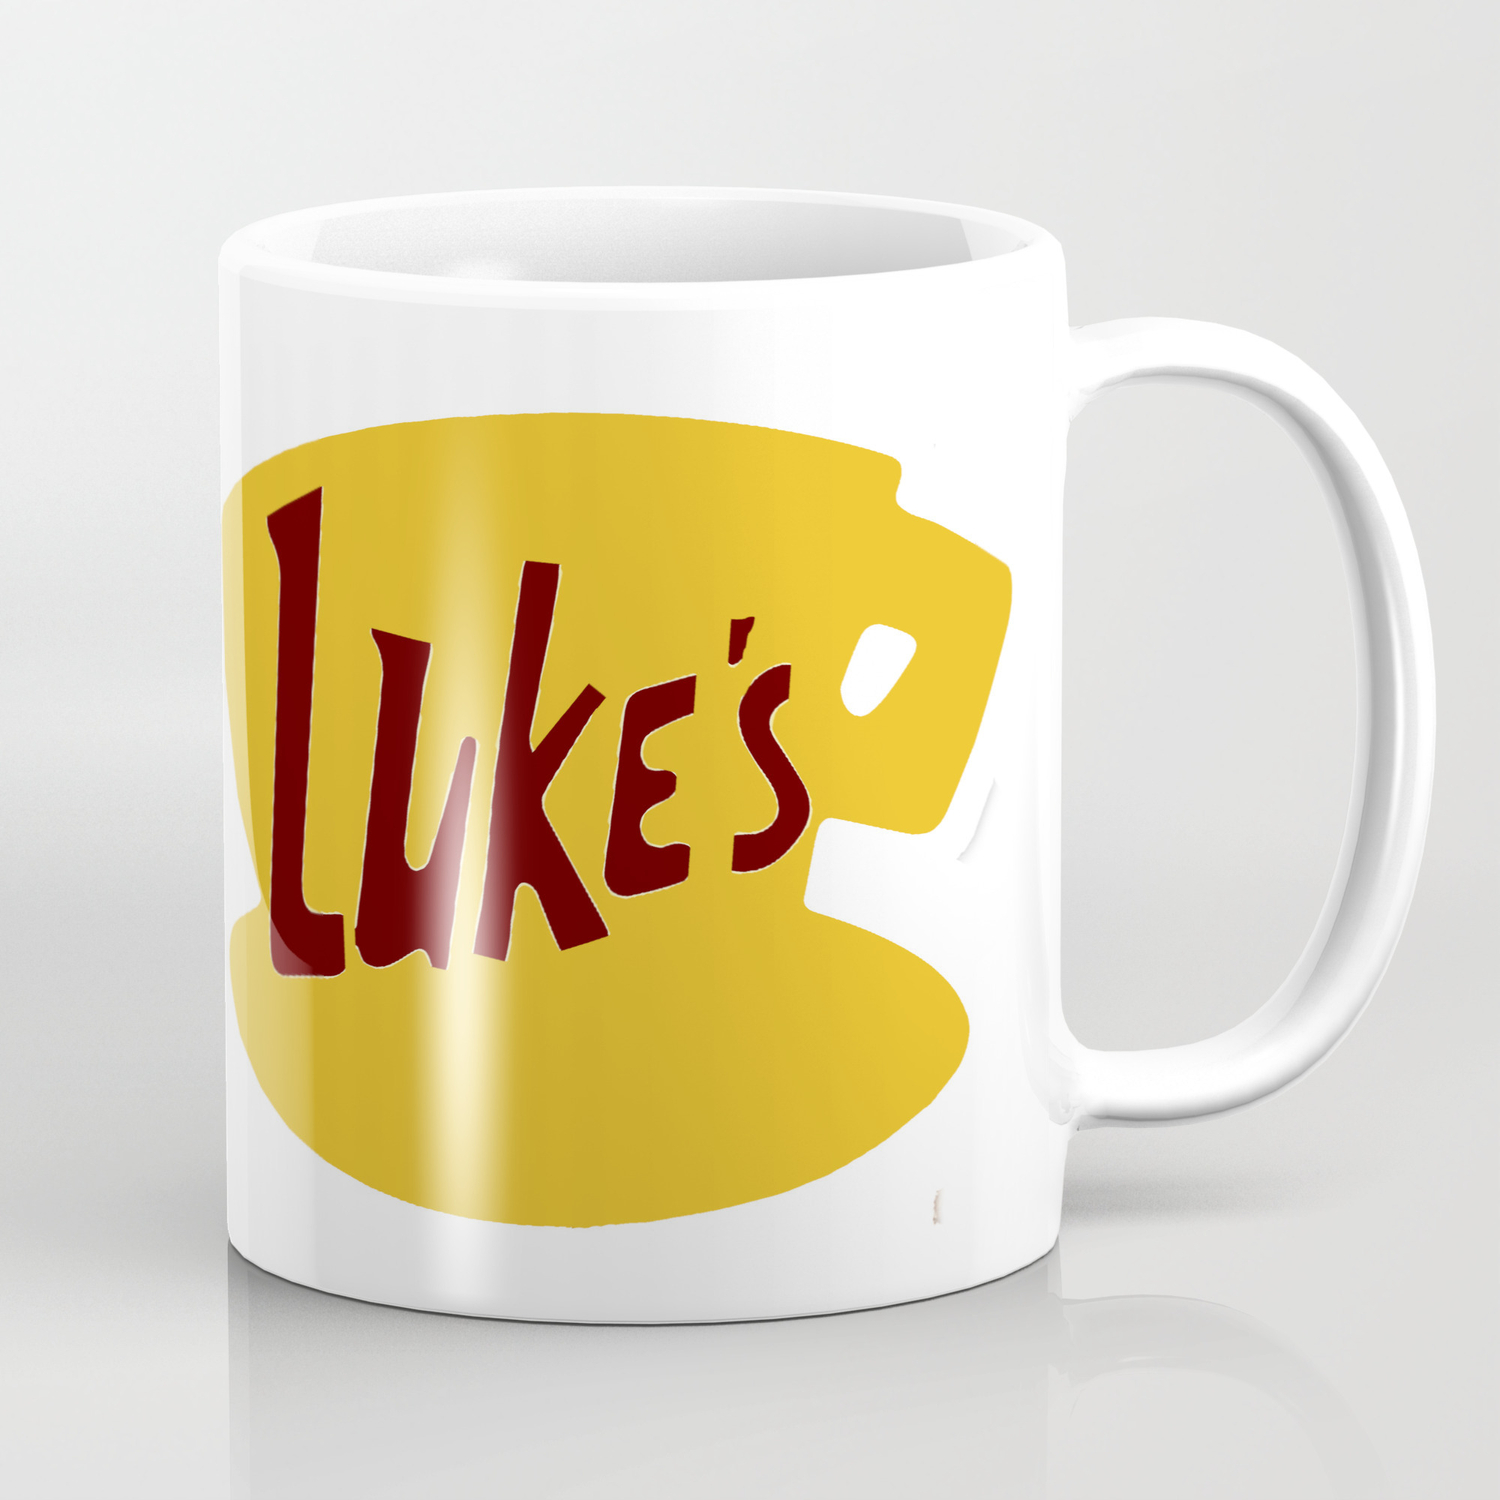 luke's coffee mug